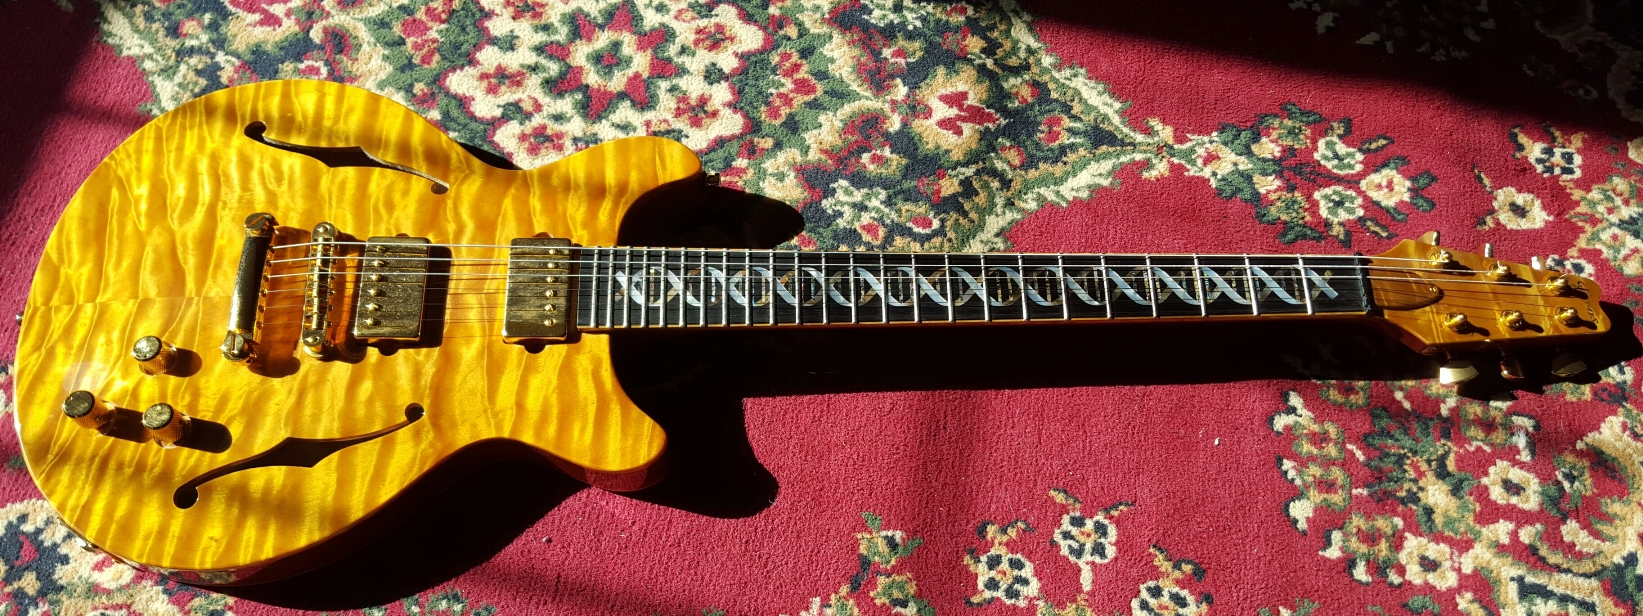 Your Preferred ES-335 Based (Non-Gibson) Guitar-1-17-18-jaros-jpg